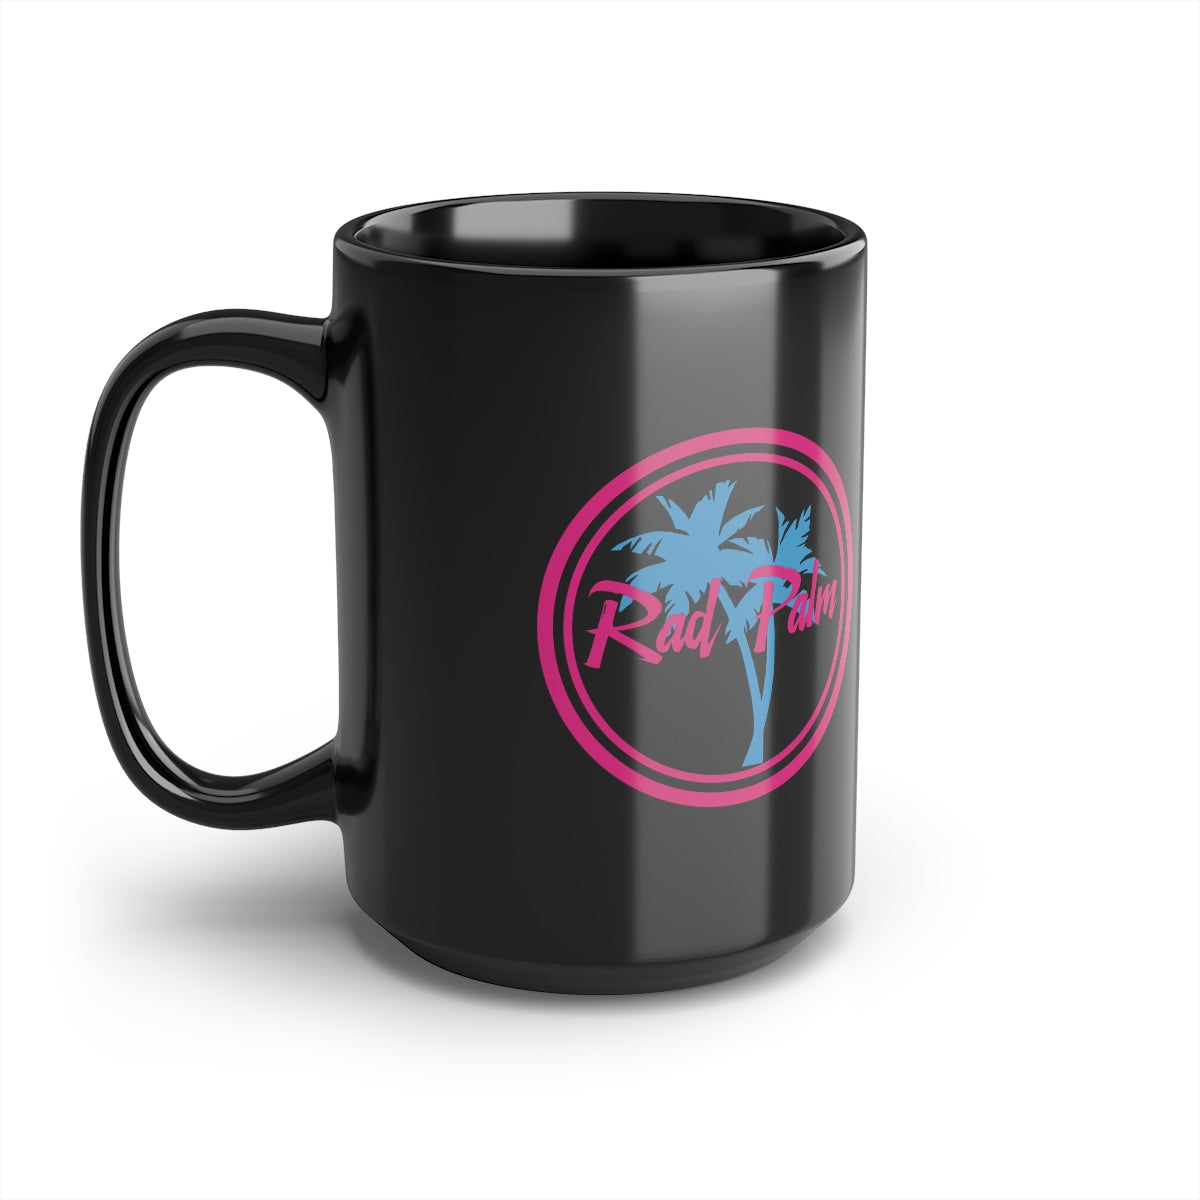 Rad Palm Pink Logo Black Mug, 15oz